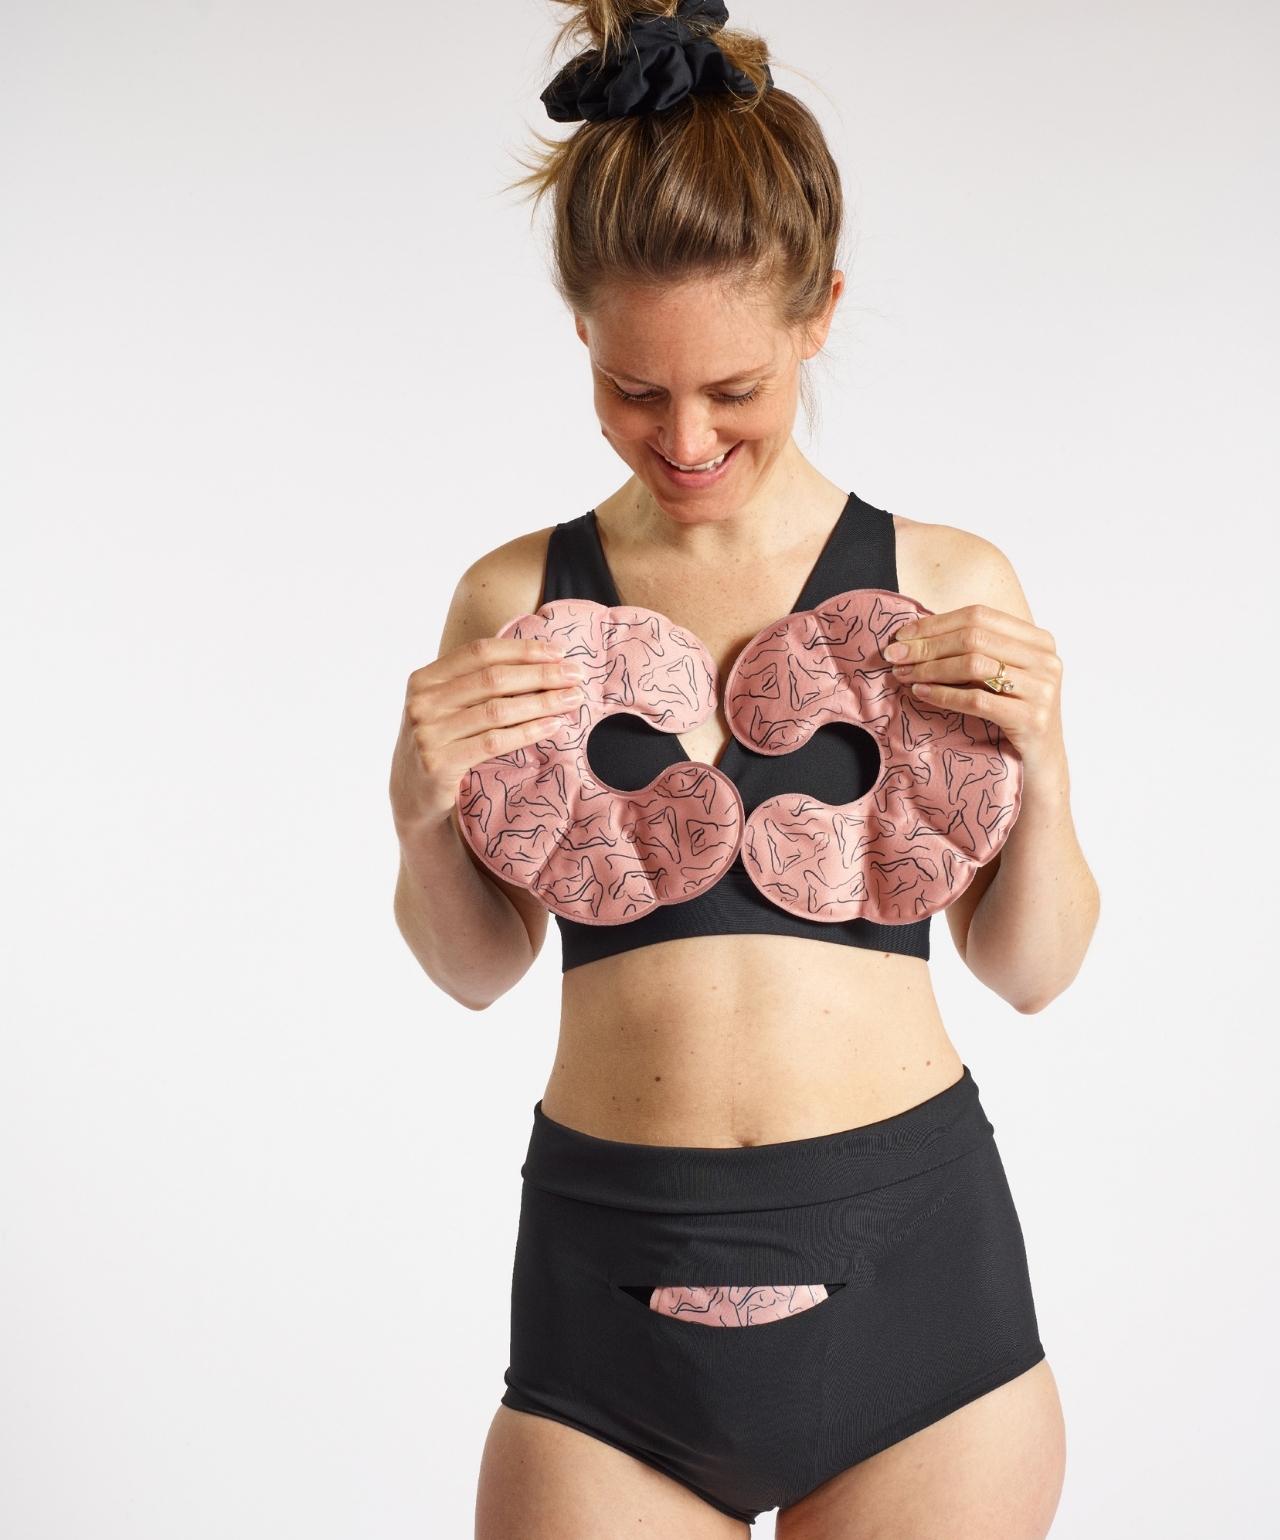 Modell wearing  FourthWear Postpartum bralette & underwear & holding Nyssa Breast & Chest ice-heat packs.